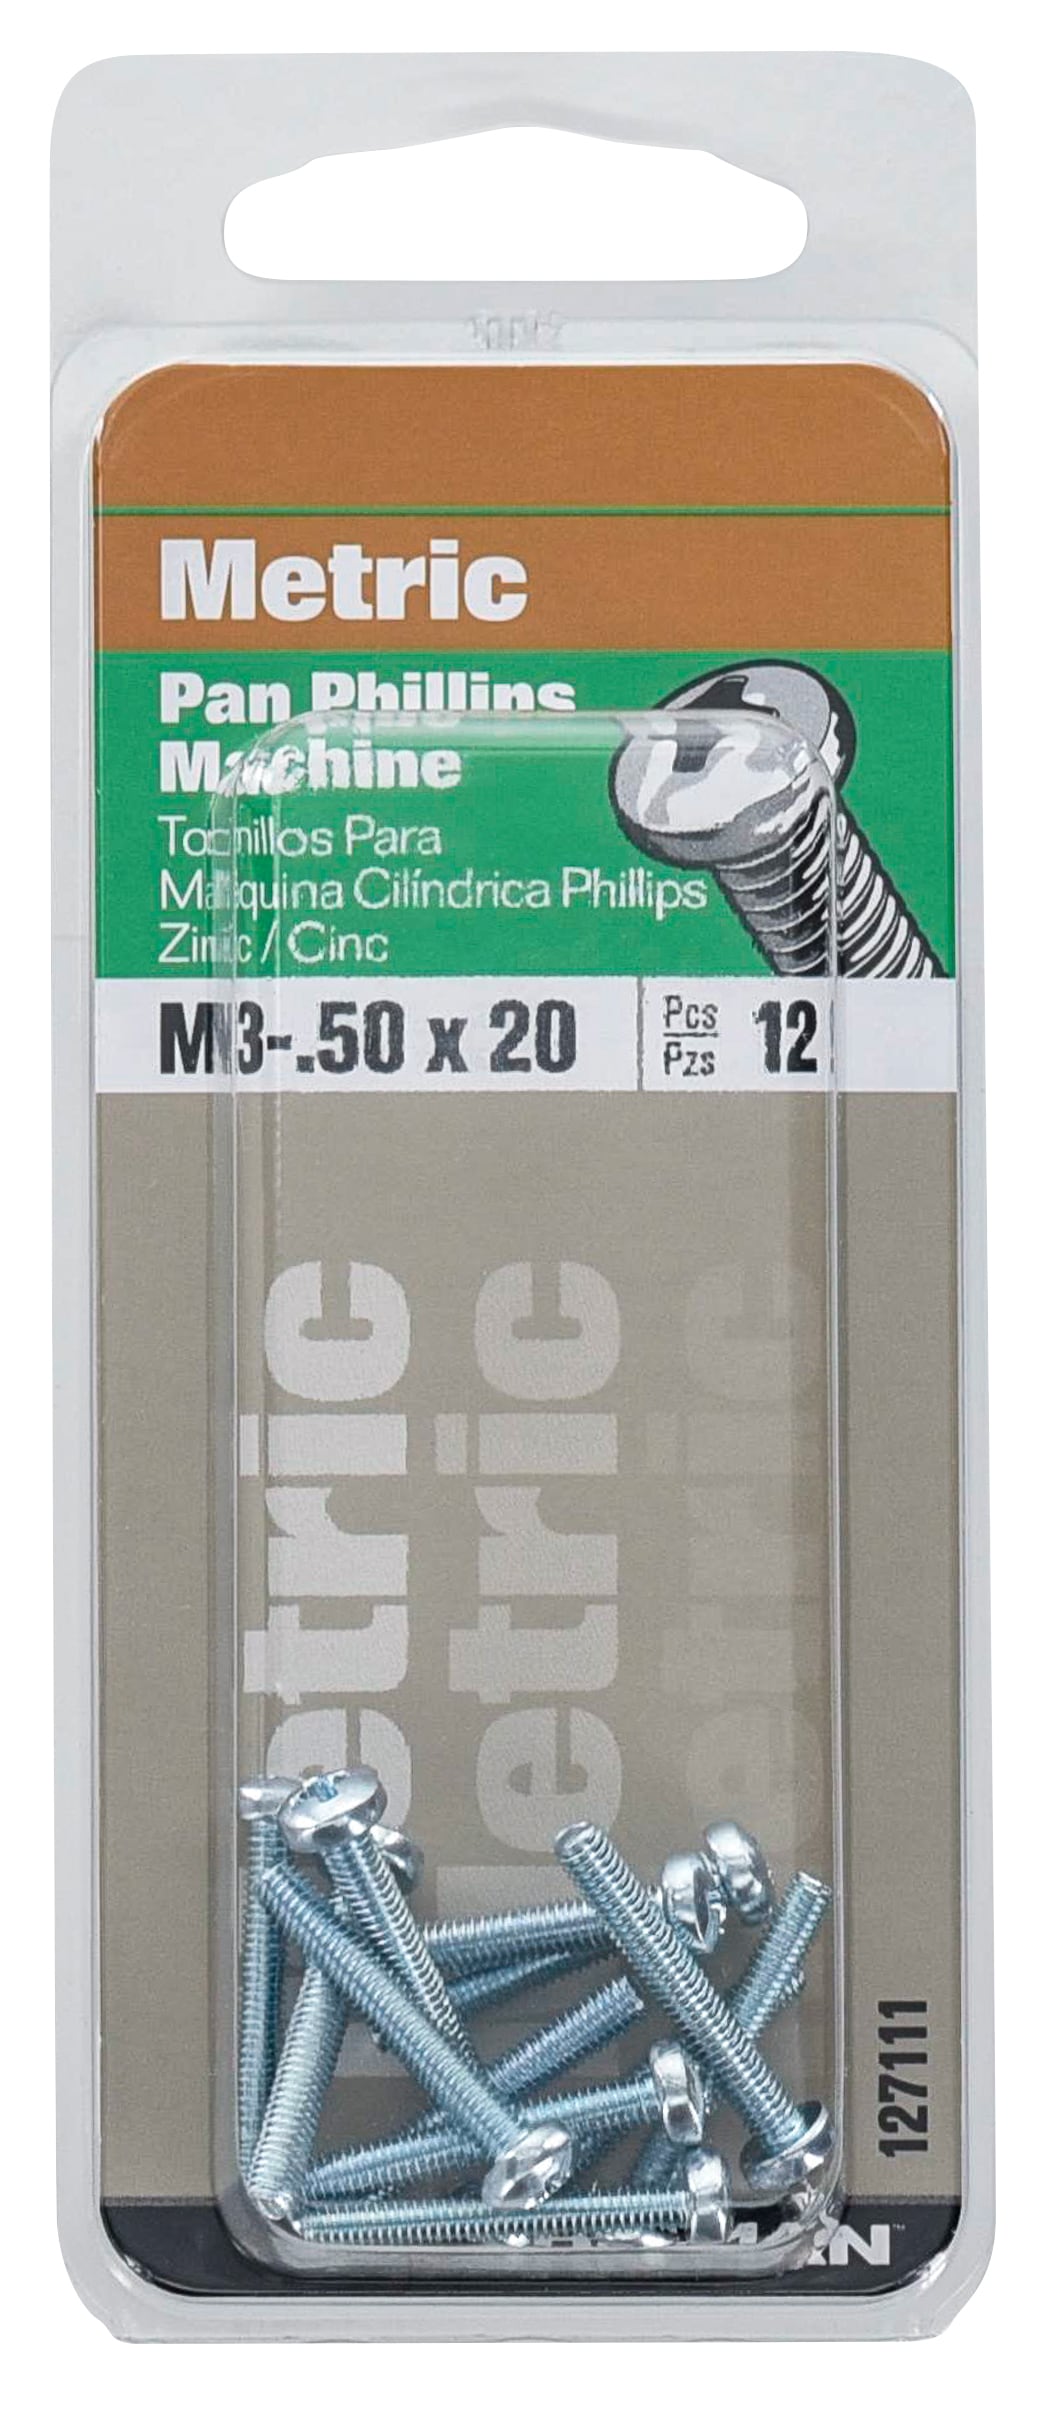 Pololu - Machine Screw: #4-40, 3/8″ Length, Phillips (25-pack)